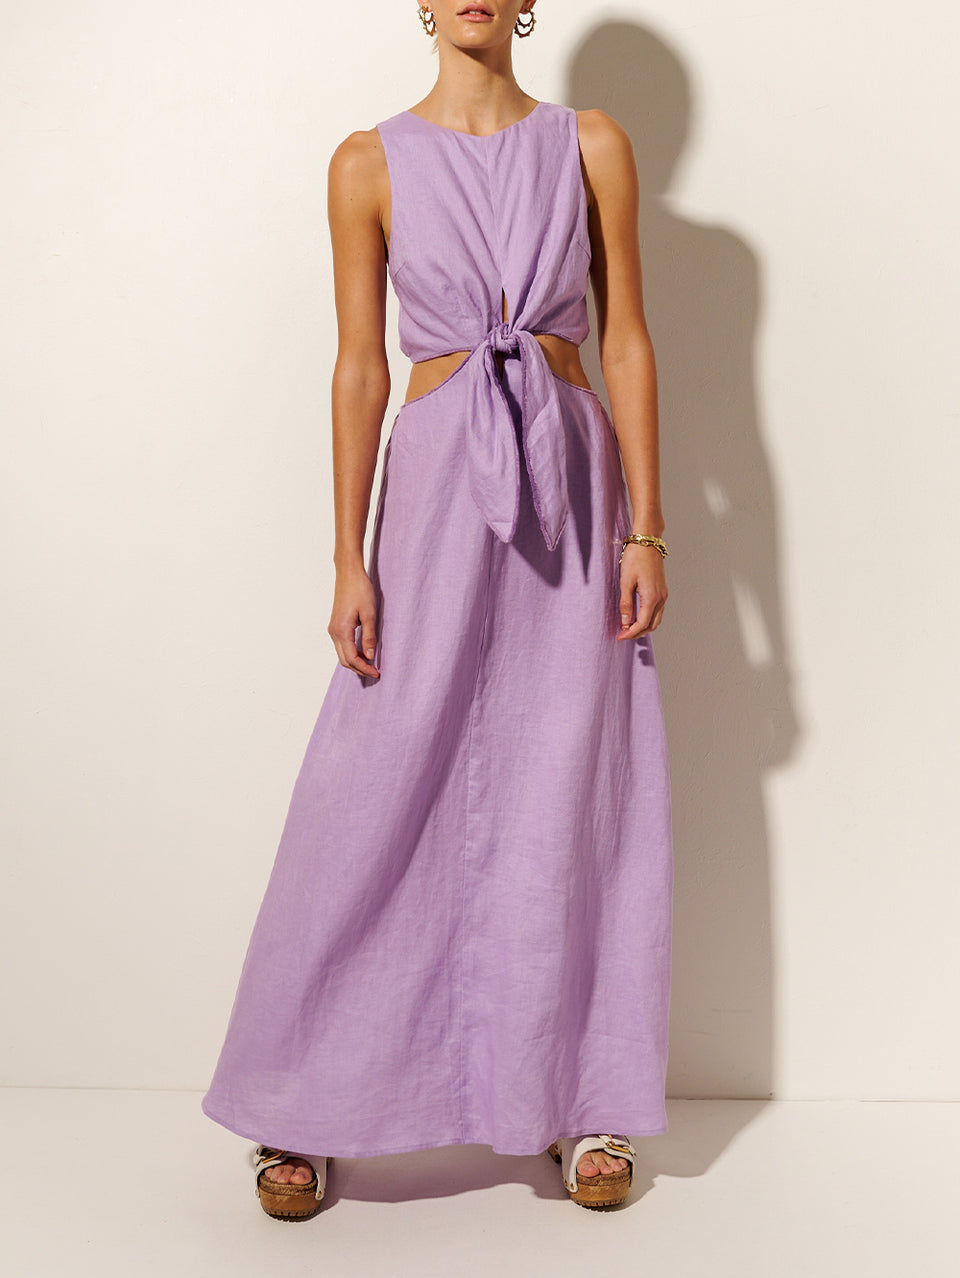 Ellie Cut Out Maxi Dress KIVARI | Model wears purple cut out maxi dress